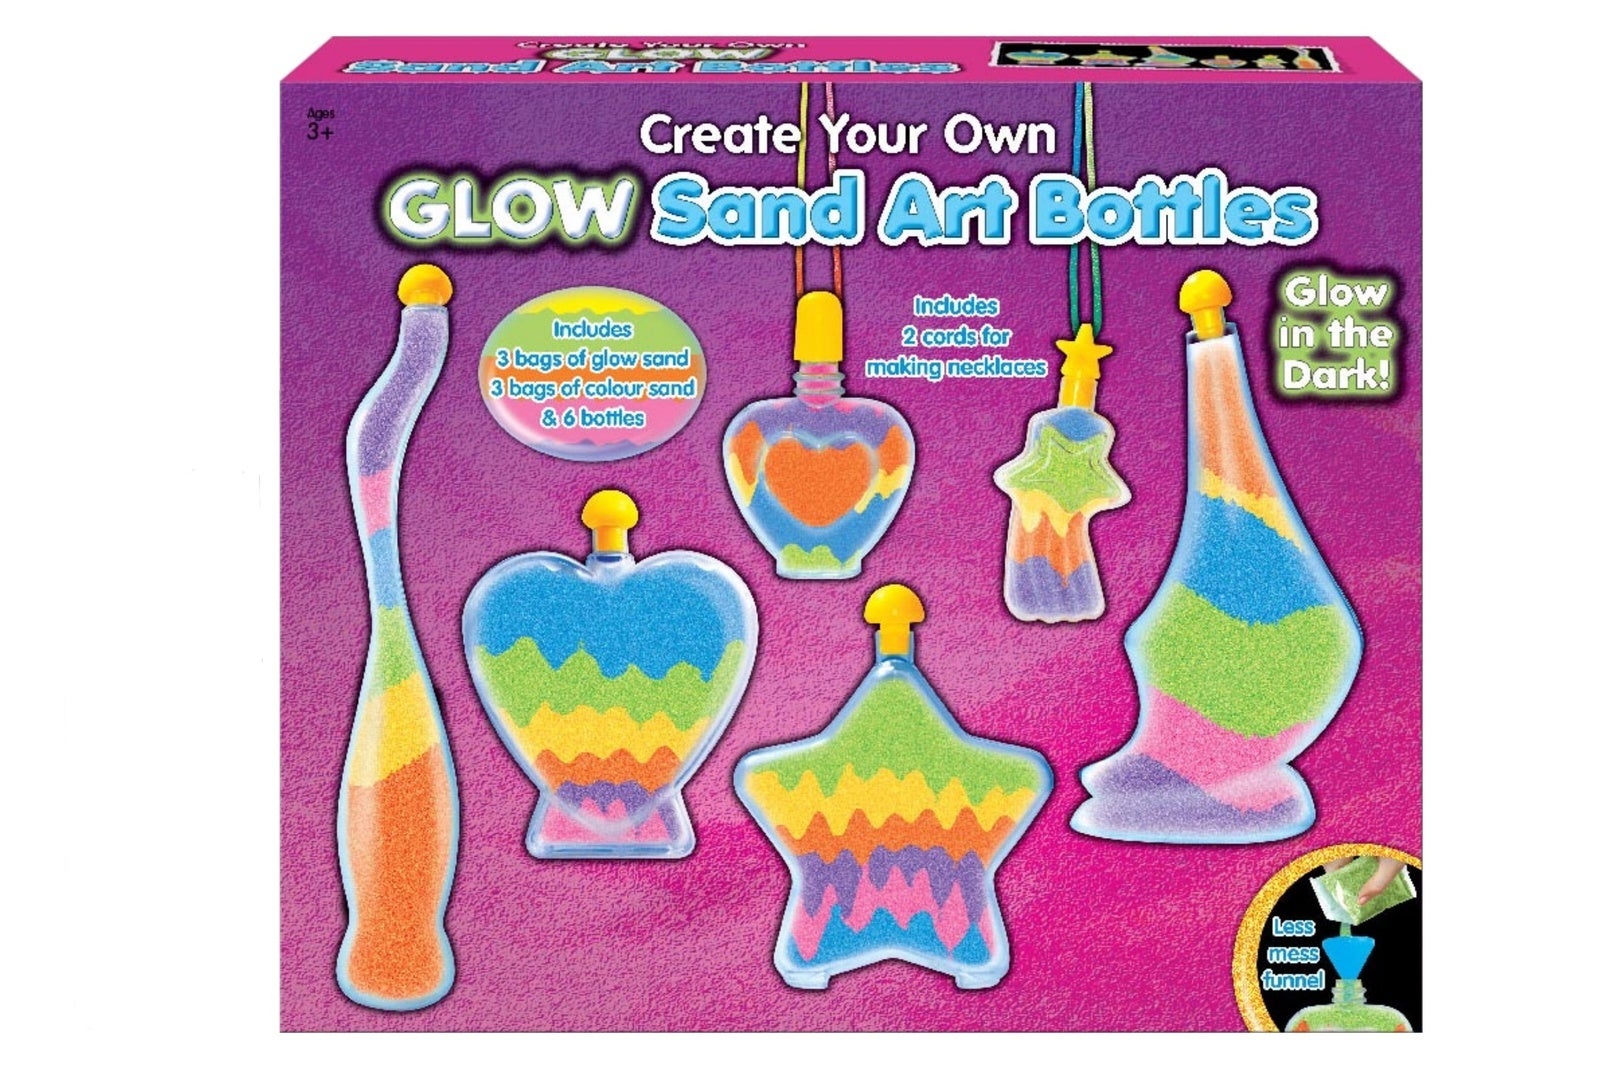 Glow Sand Art Bottles